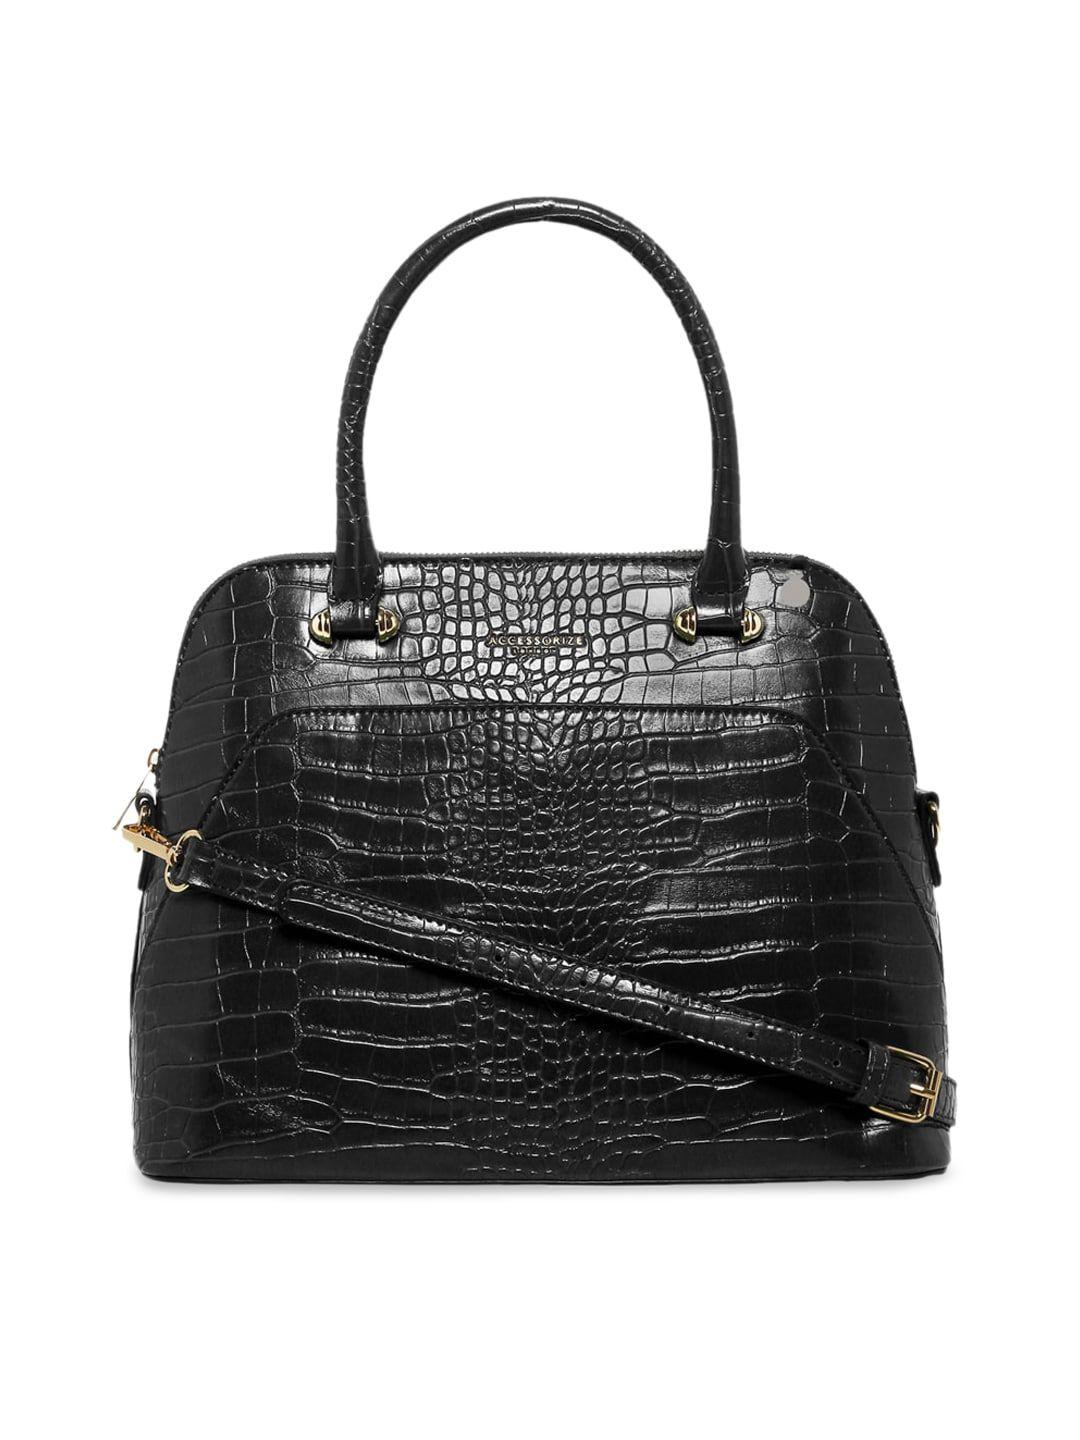 accessorize london women faux leather thea croc textured handheld bag